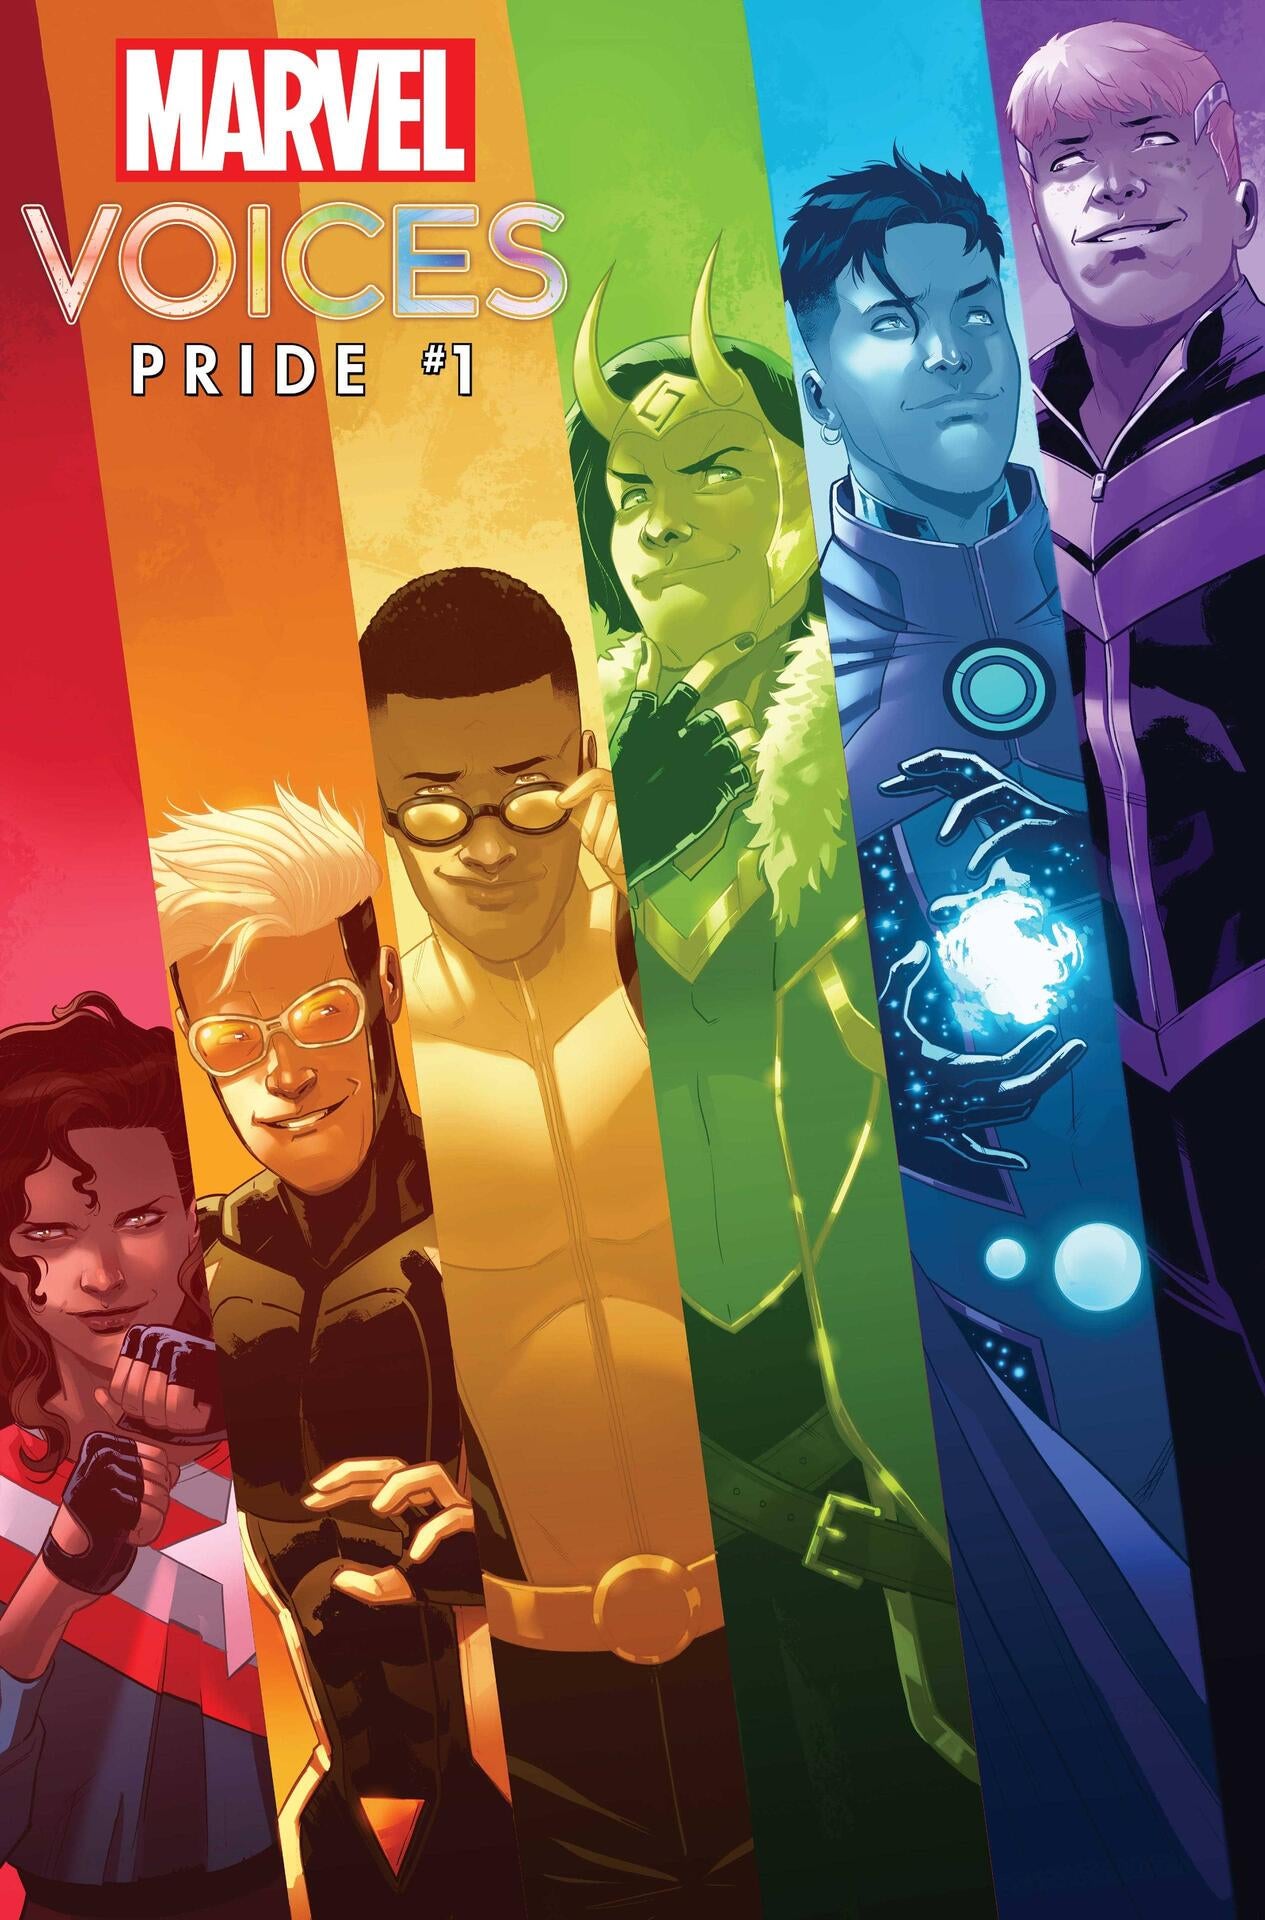 Marvel Voices: Pride #1 variant cover by Steven Byrne. (Image: Marvel Comics)